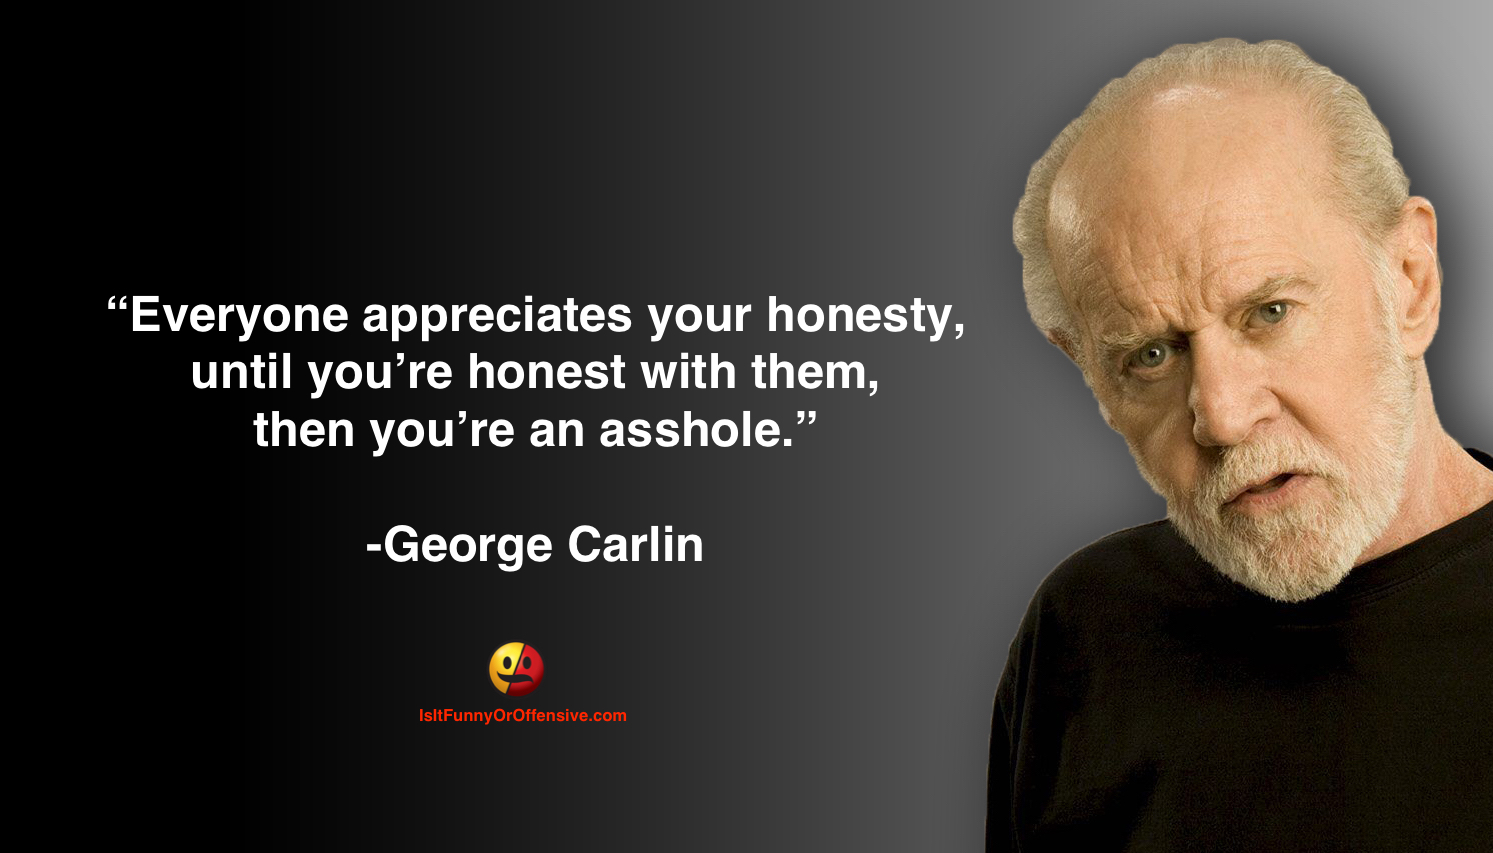 George Carlin on Honesty